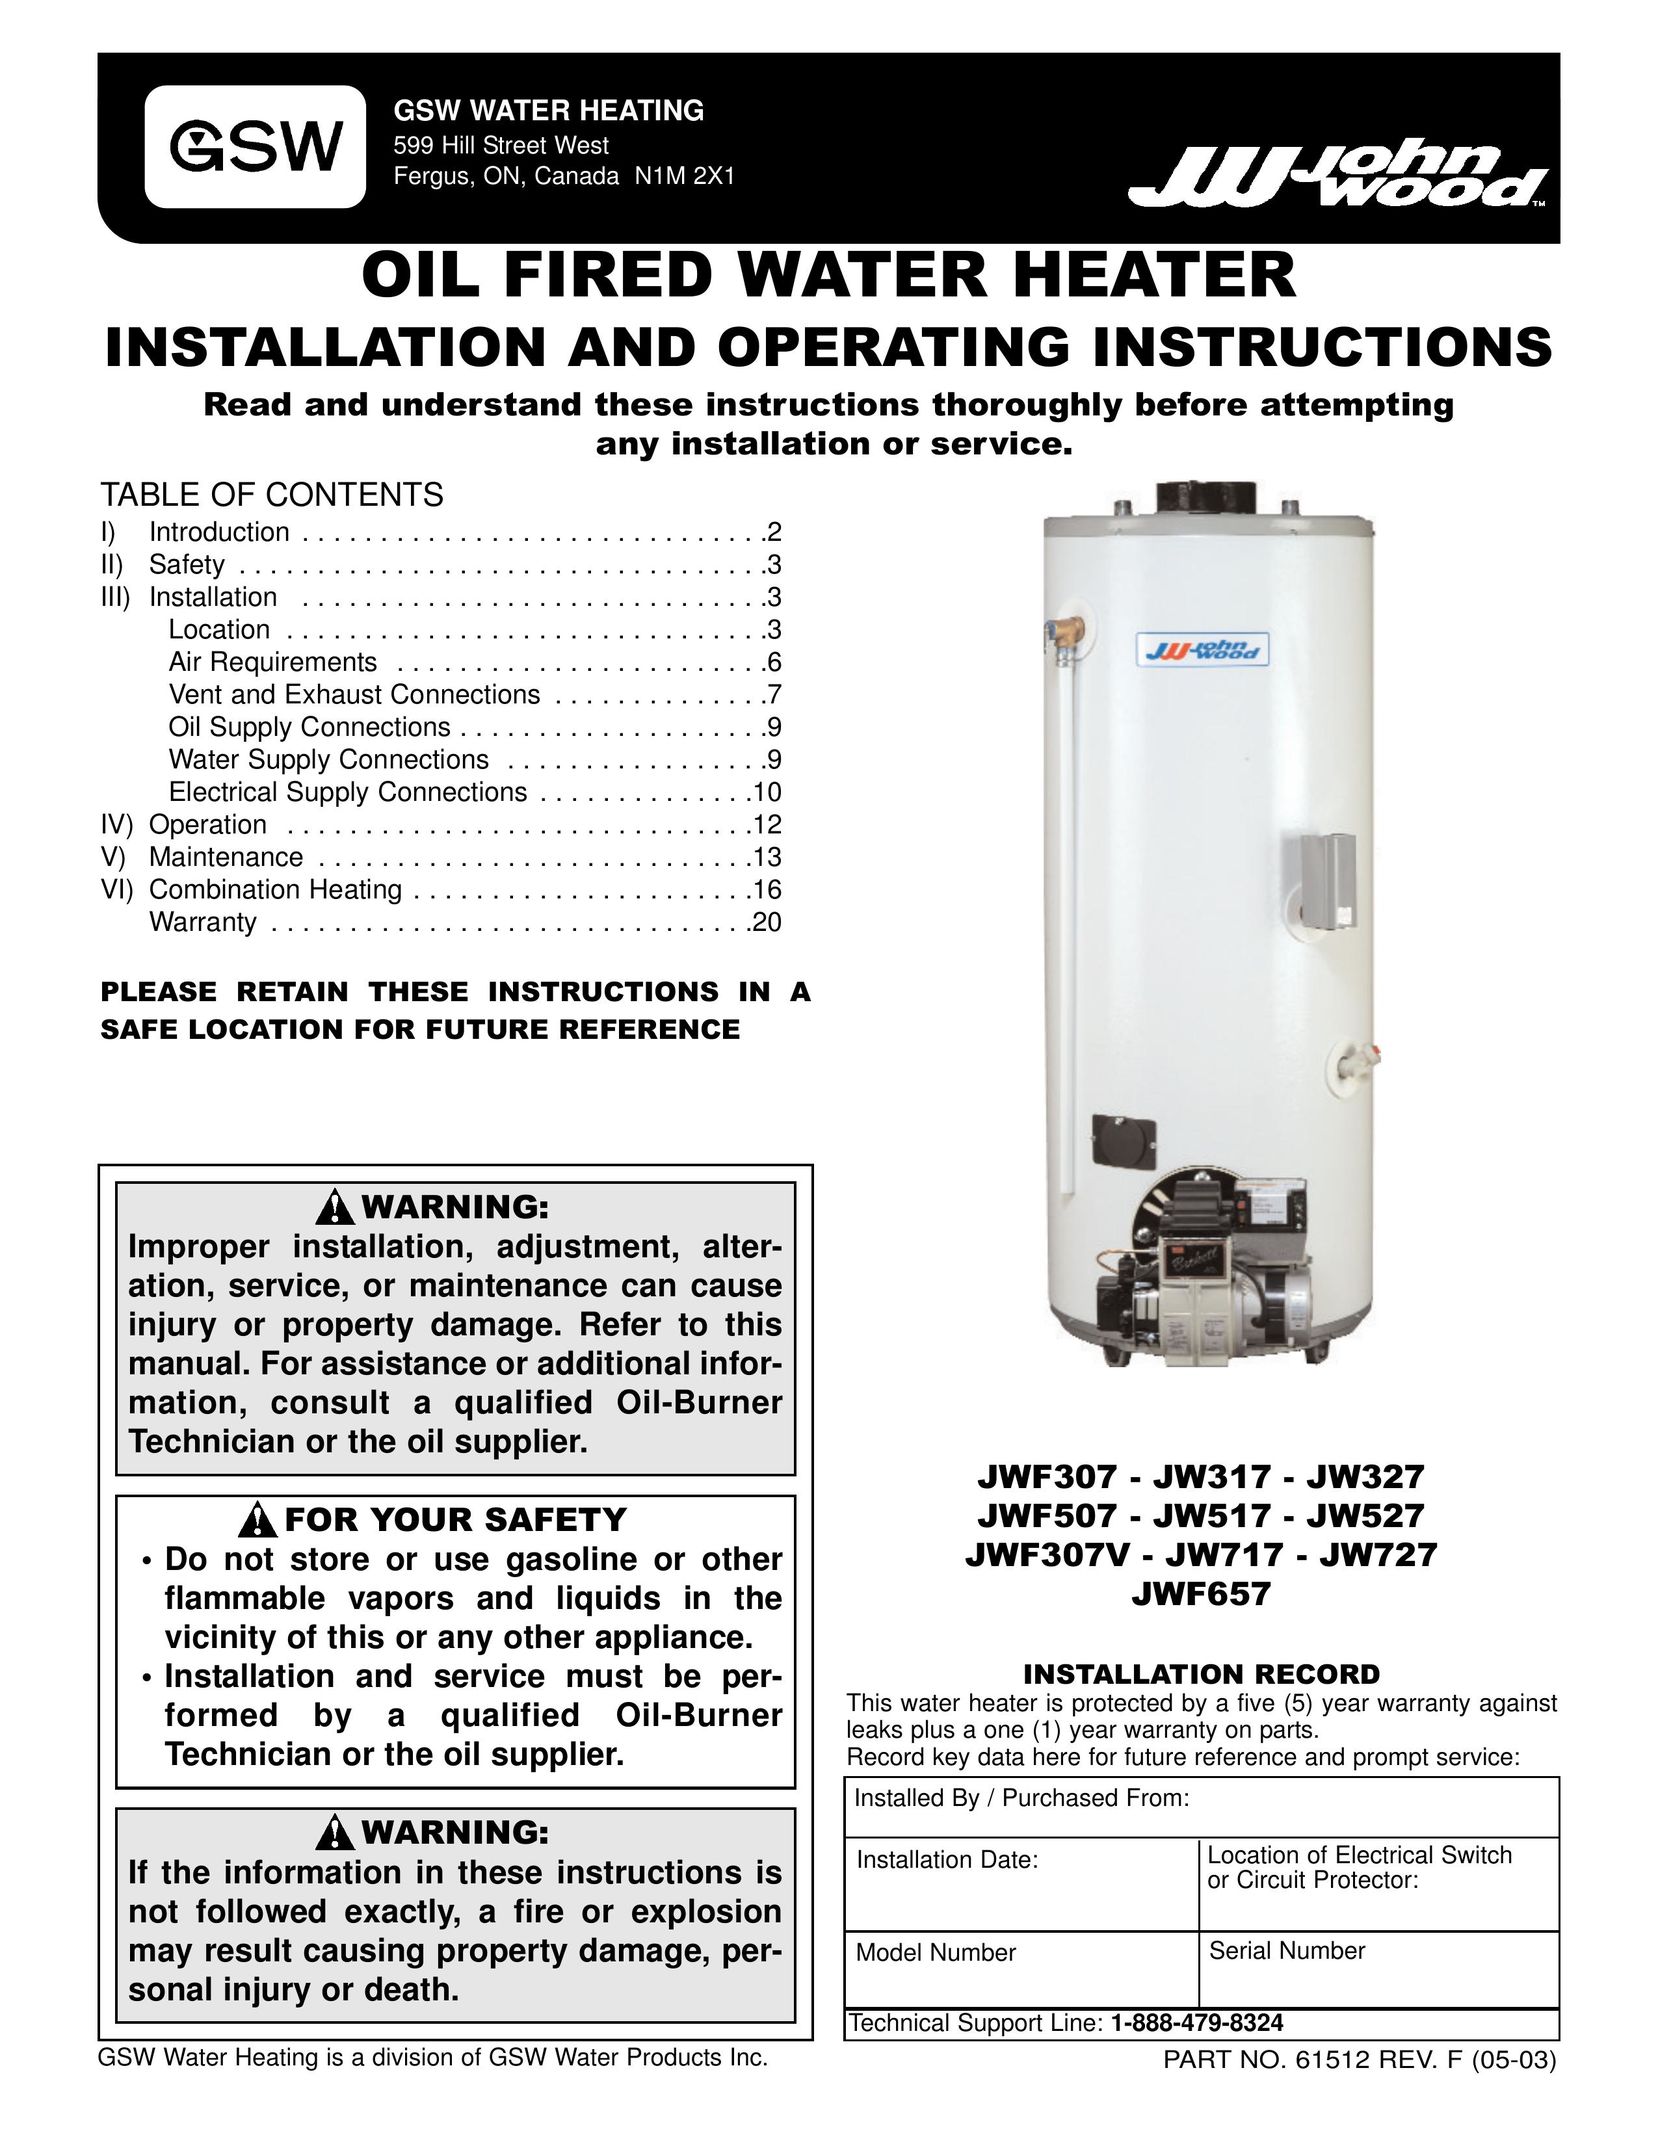 GSW JW717 Water Heater User Manual